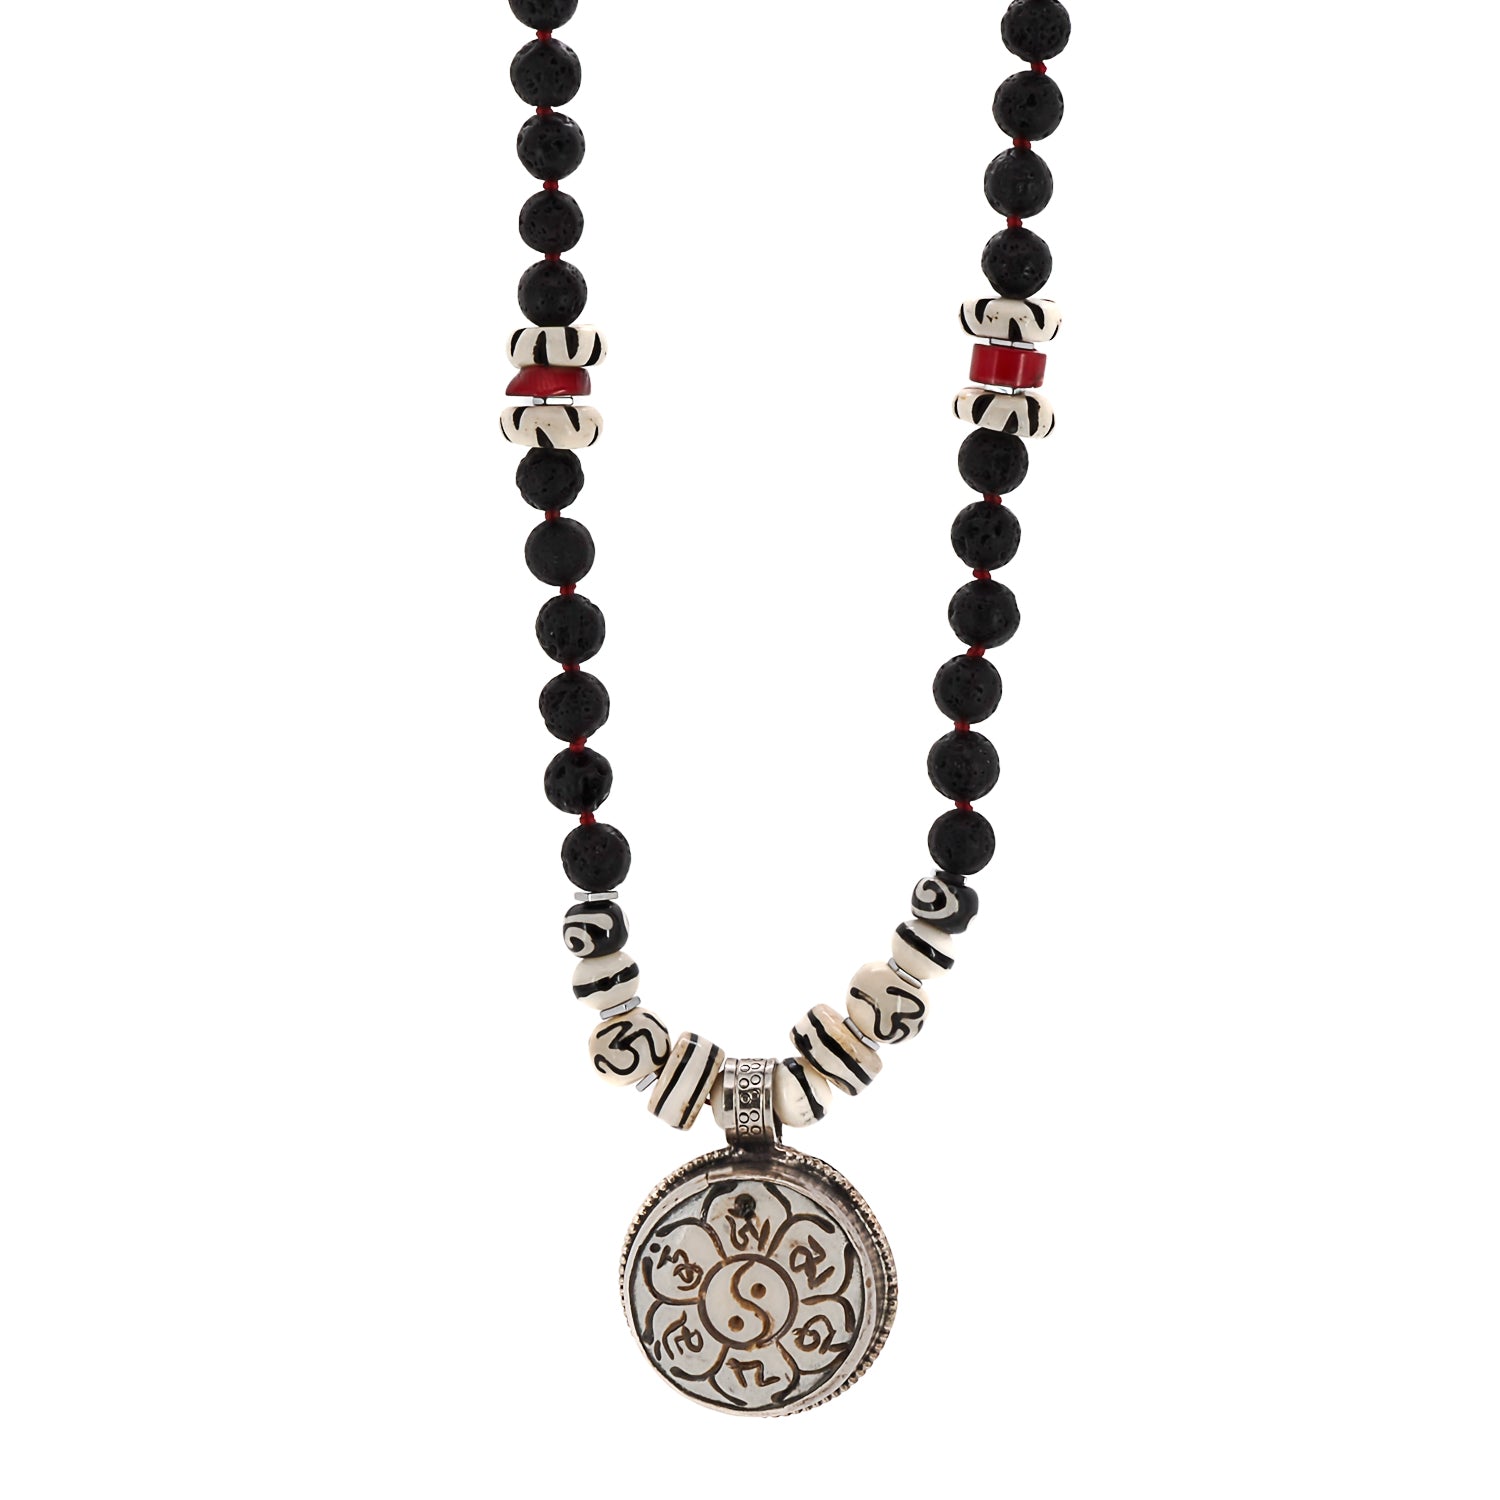 Yin Yang Balance Necklace, handmade with black lava rock and Nepal bone beads, featuring a striking Yin Yang pendant.